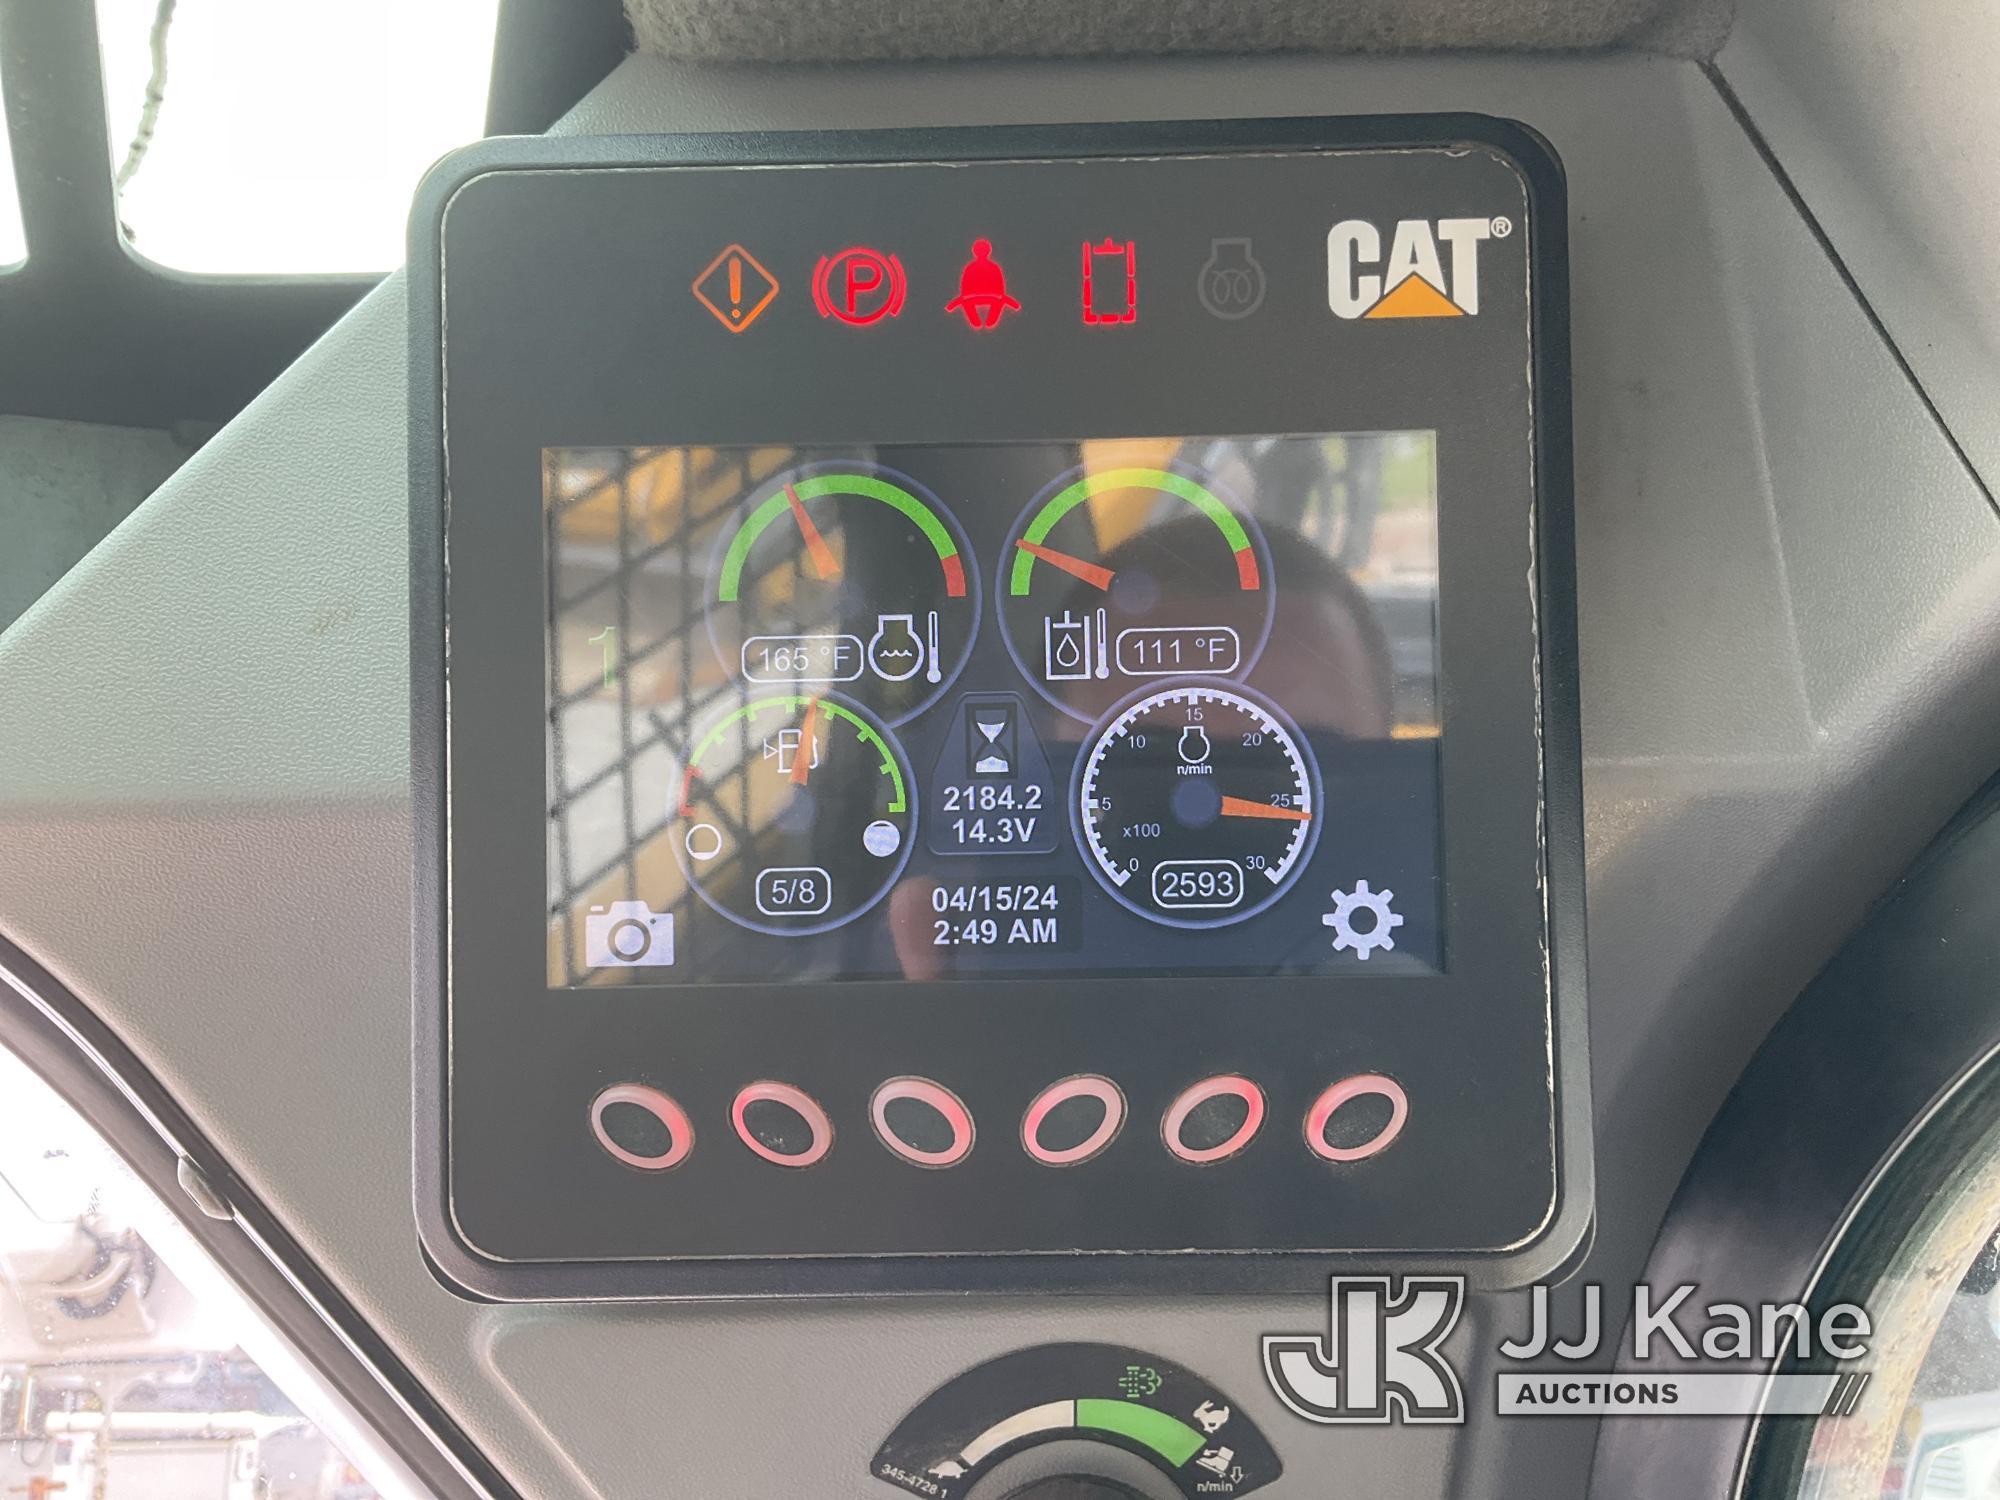 (Kansas City, MO) 2018 Cat 289D Tracked Skid Steer Loader Runs, Moves, & Operates) (Has Engine Noise